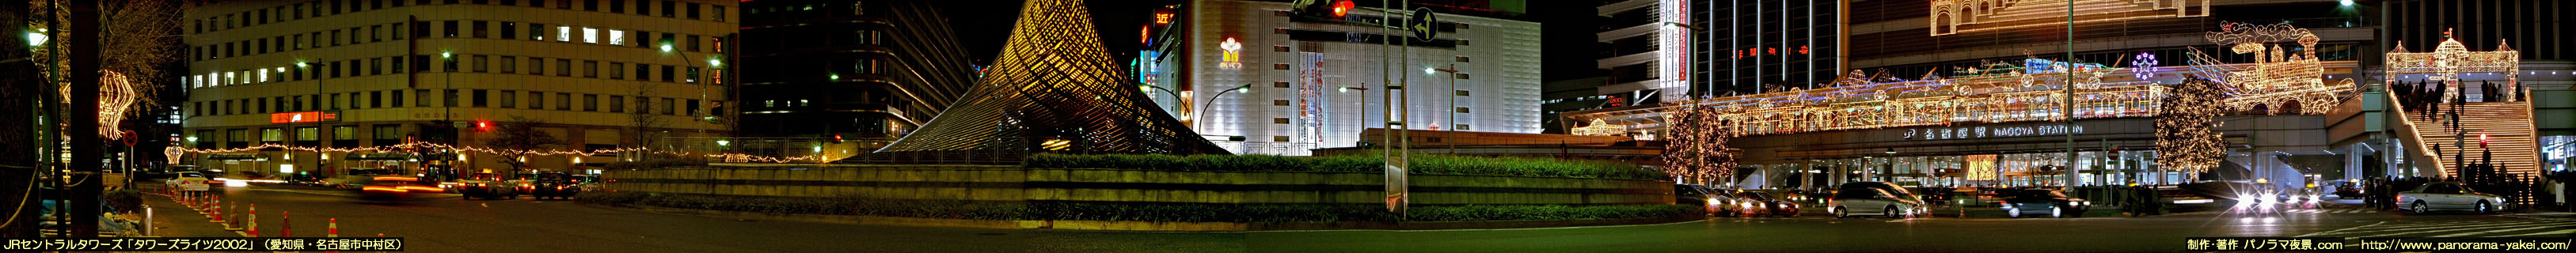 JR名古屋駅前ロータリーとタワーズライツ2002のパノラマ夜景写真